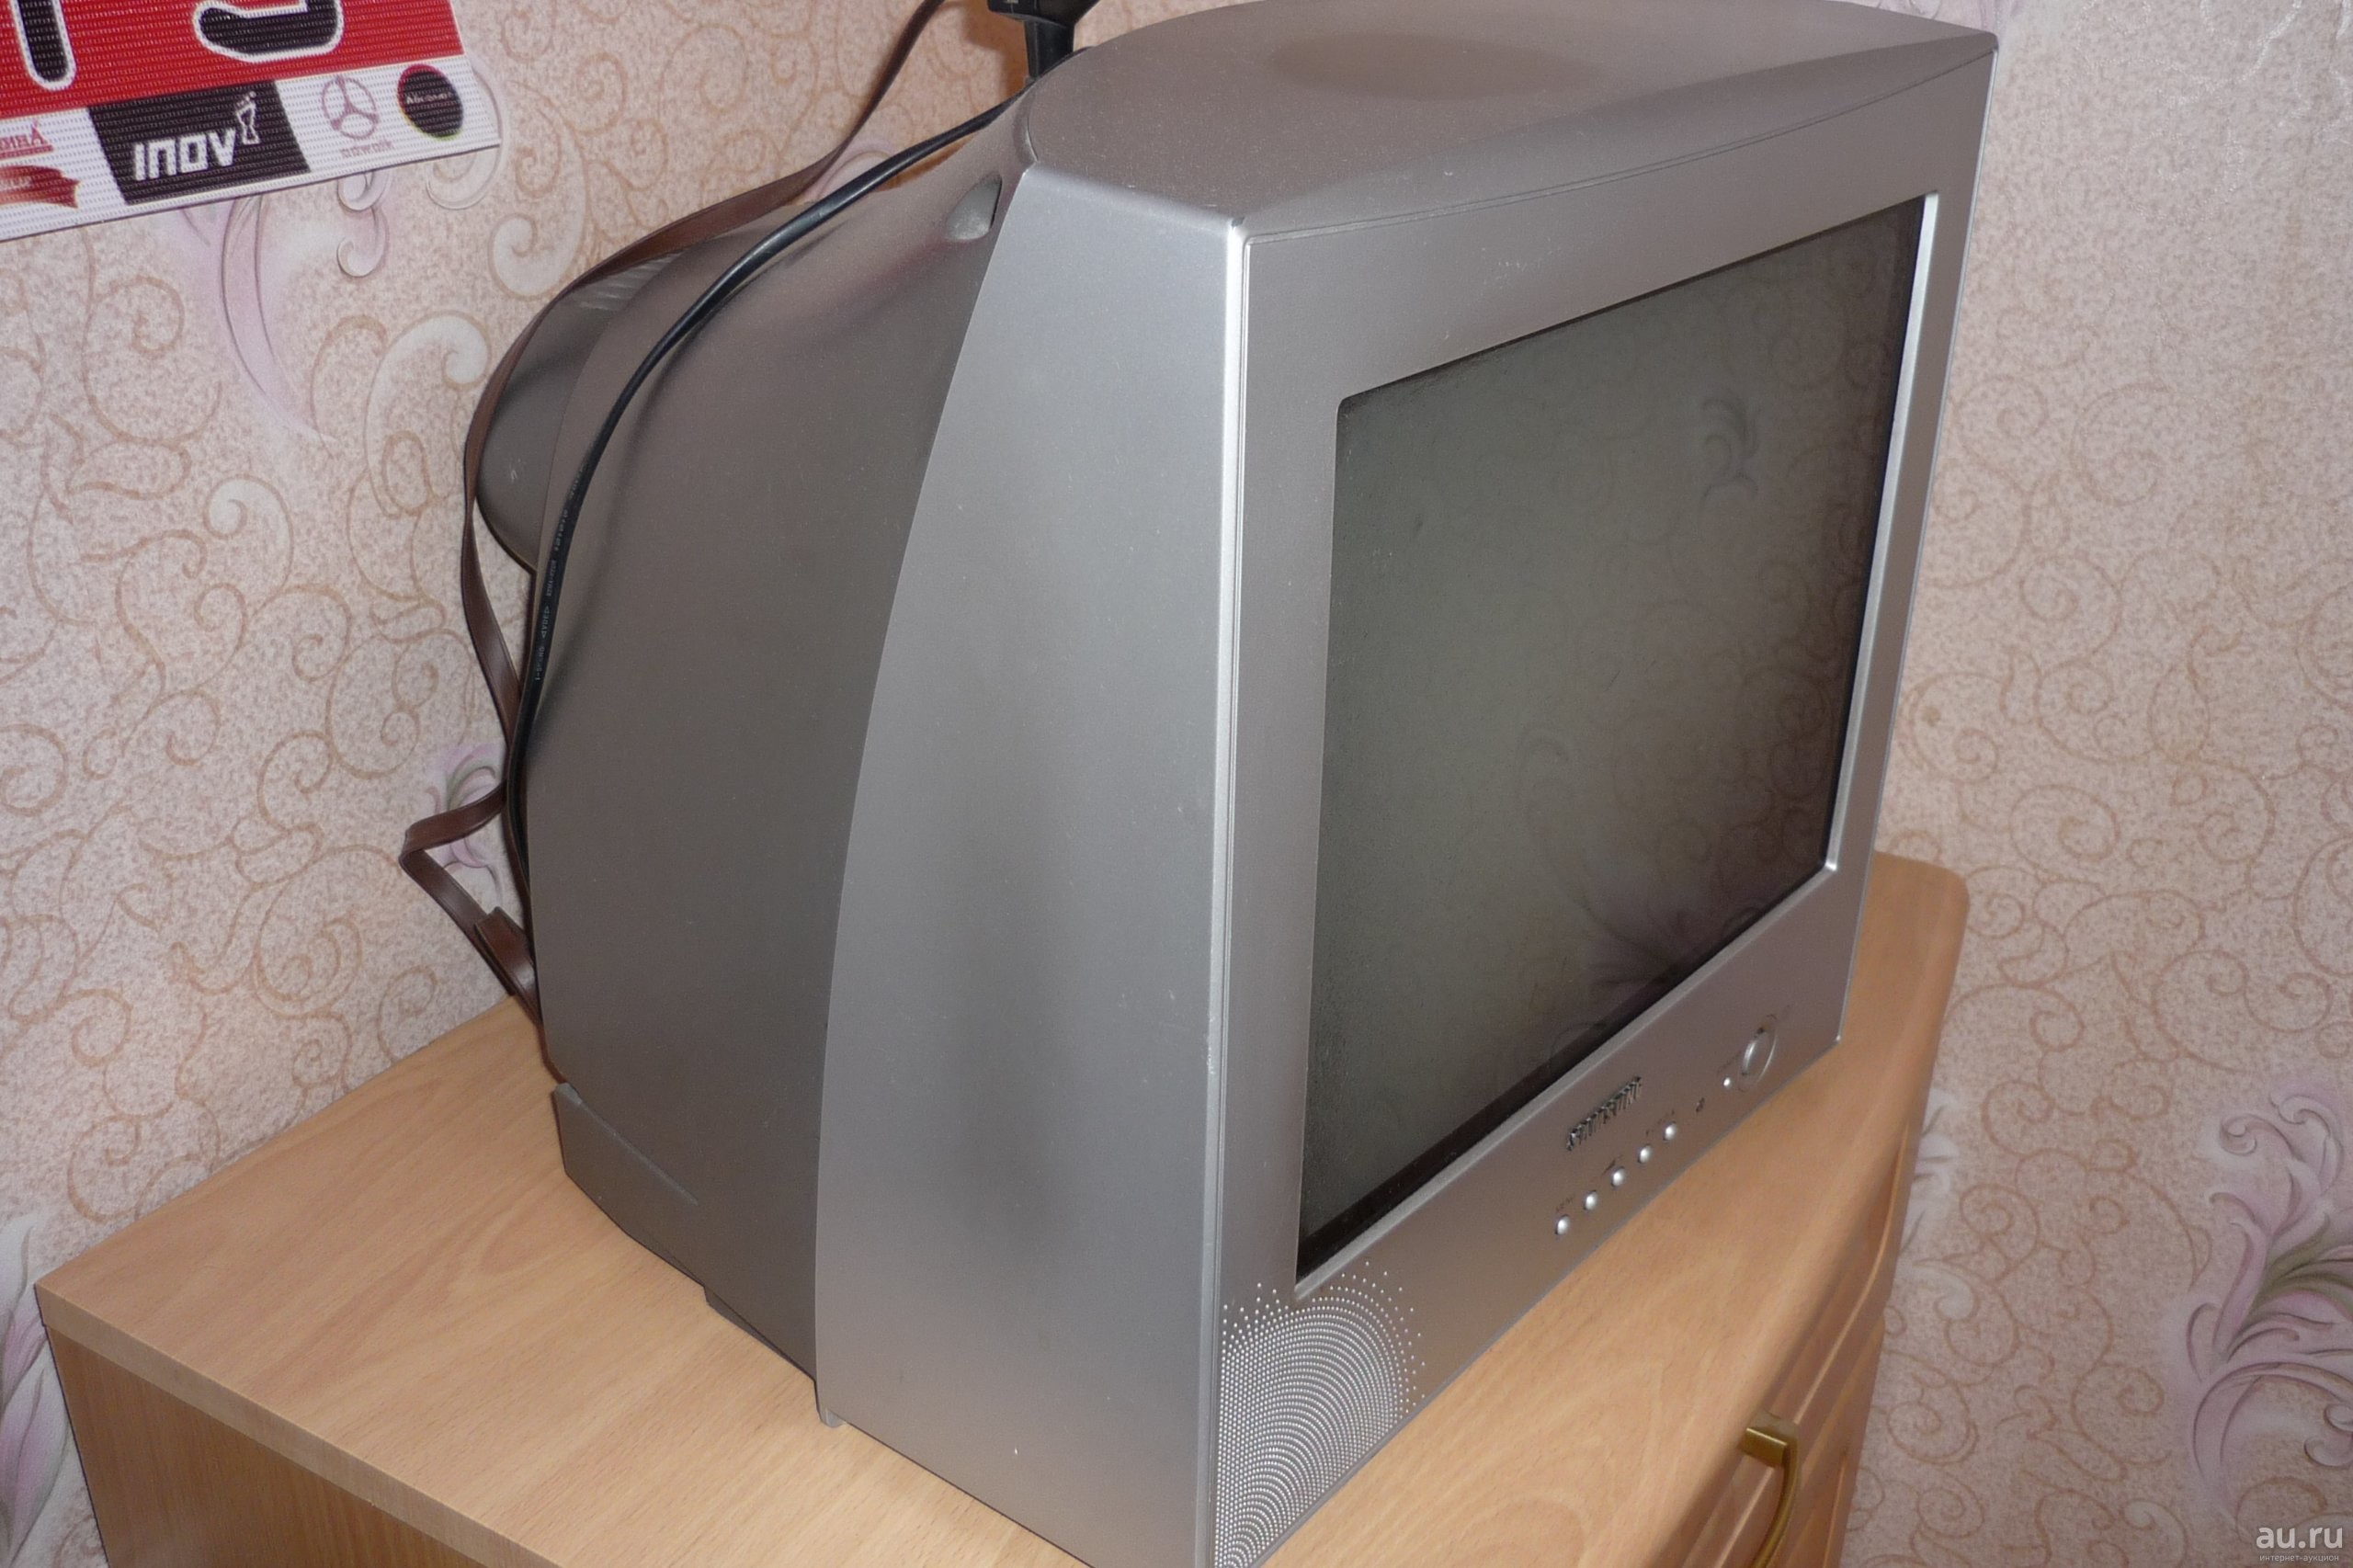 Авито в новгород телевизоры. Телевизор самсунг старый кинескопный. Samsung 21 дюйм кинескопный. Телевизор Sharp ЭЛТ 21 дюйм. ЭЛТ телевизор Sharp 21 дюймов.